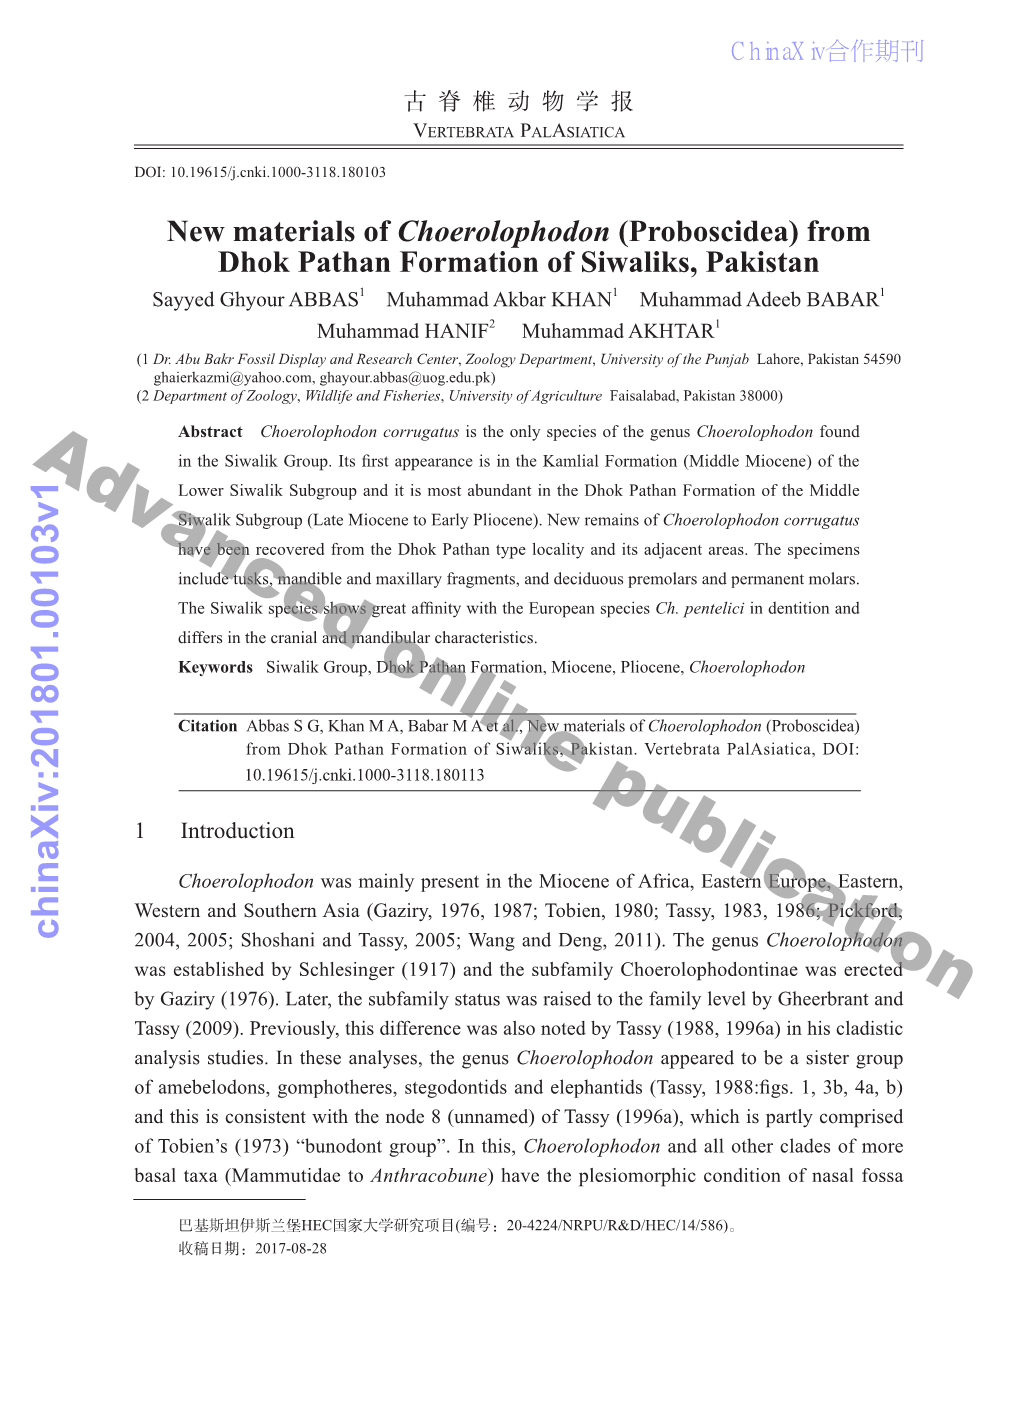 Advanced Online Publication Chinaxiv:201801.00103V1 Fig